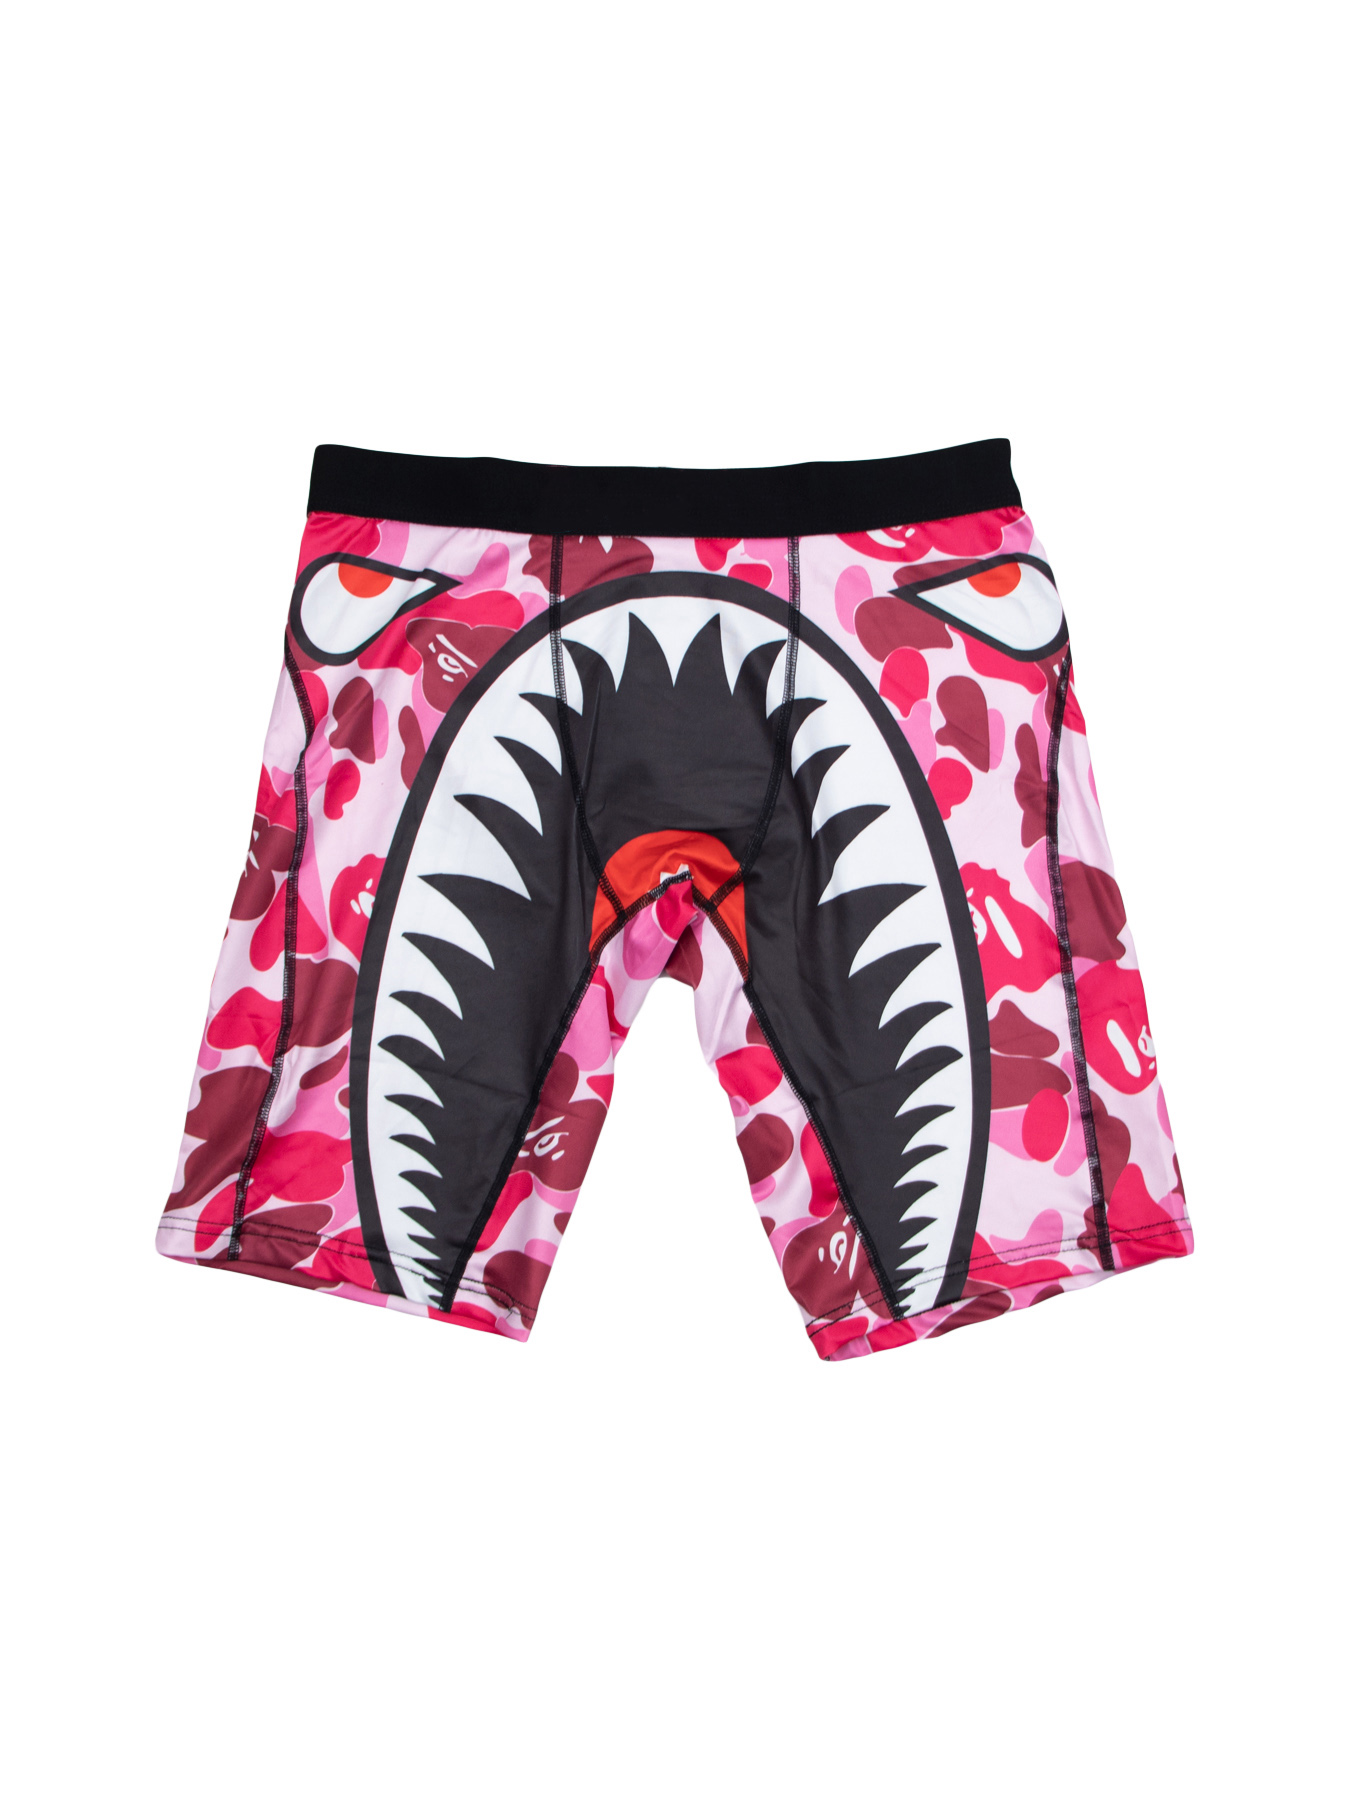 Men Fashion 3D Underwear Animal Elephant Shark Cow Colorful Spoof